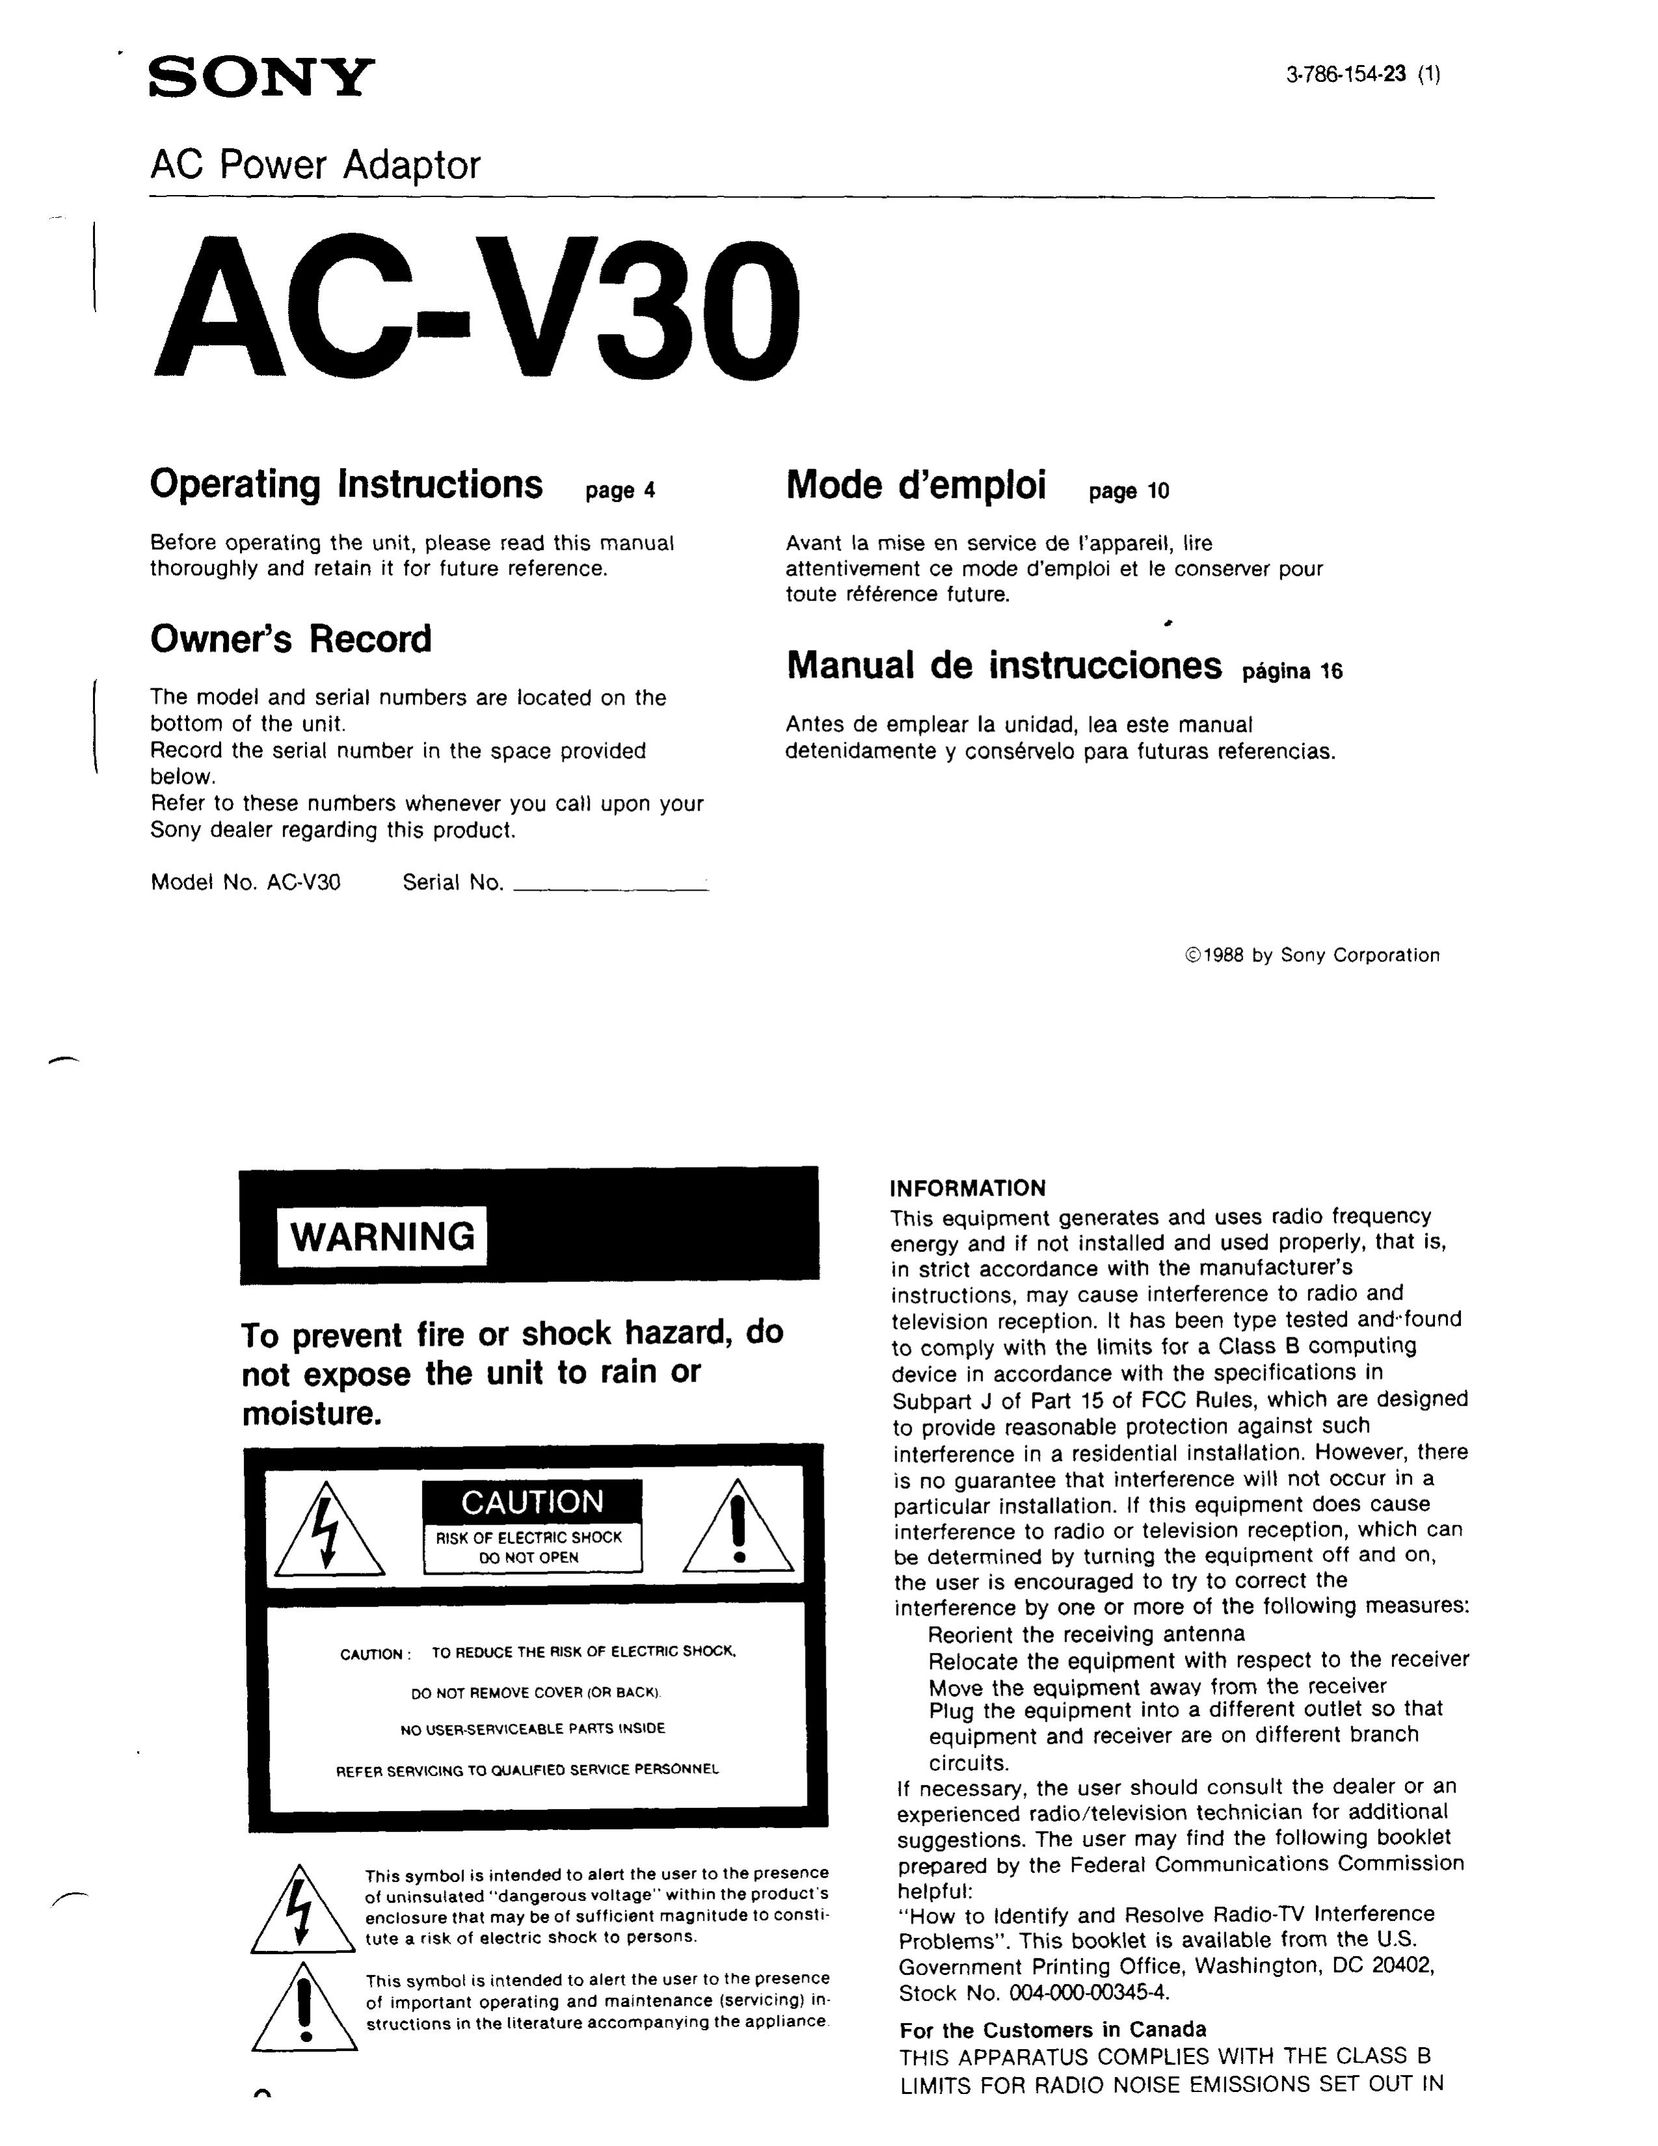 Sony AC-V30 Network Card User Manual